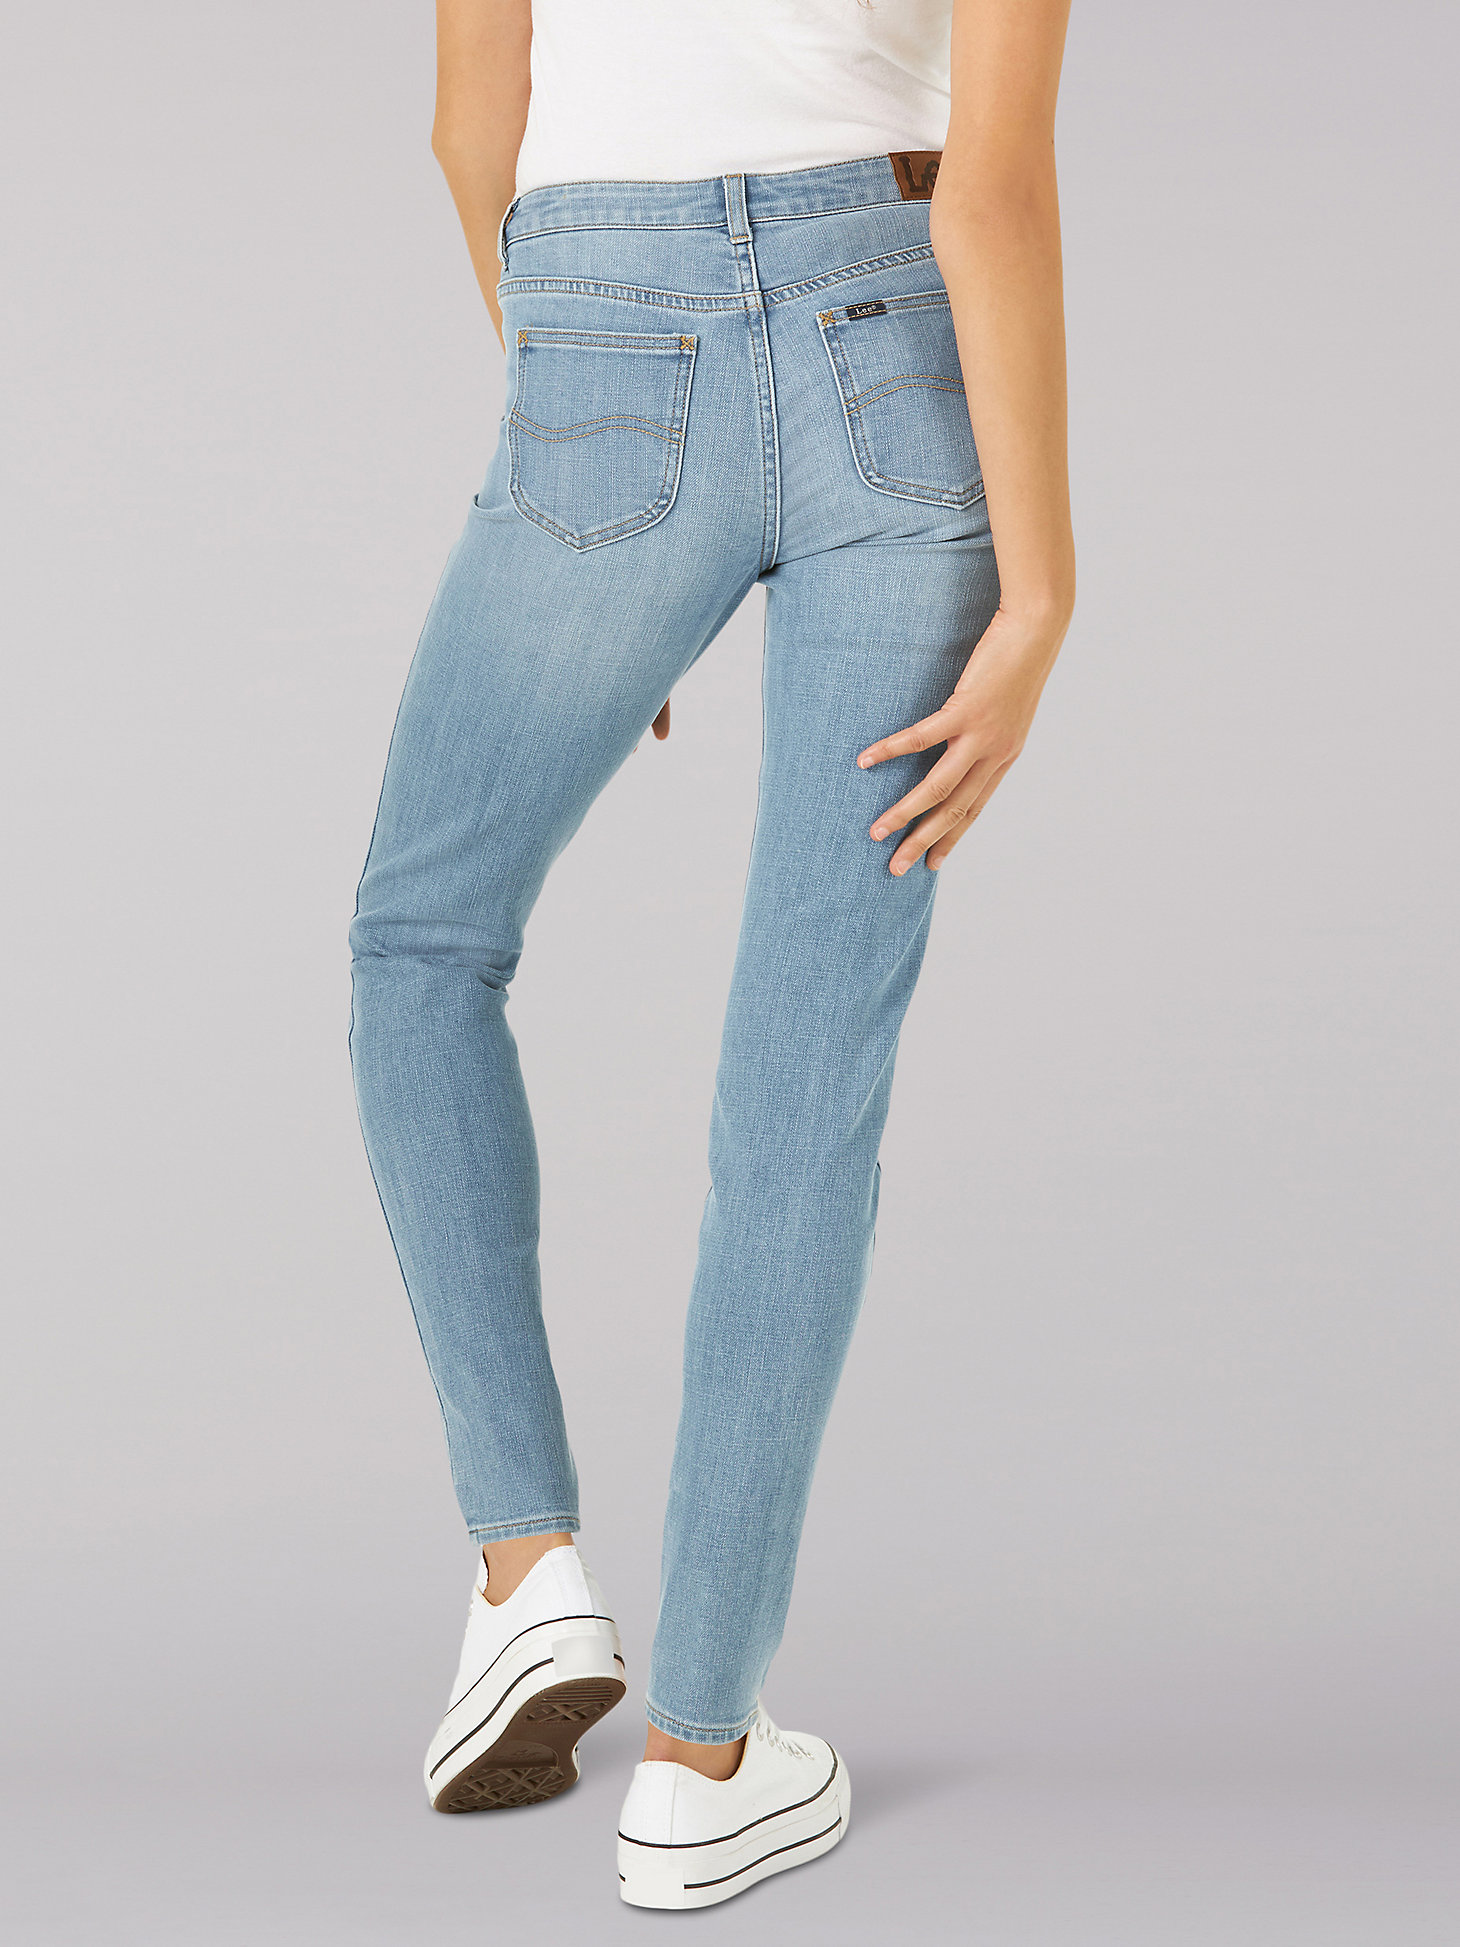 Women's Legendary Slim Fit Skinny Jean in Solstice alternative view 1